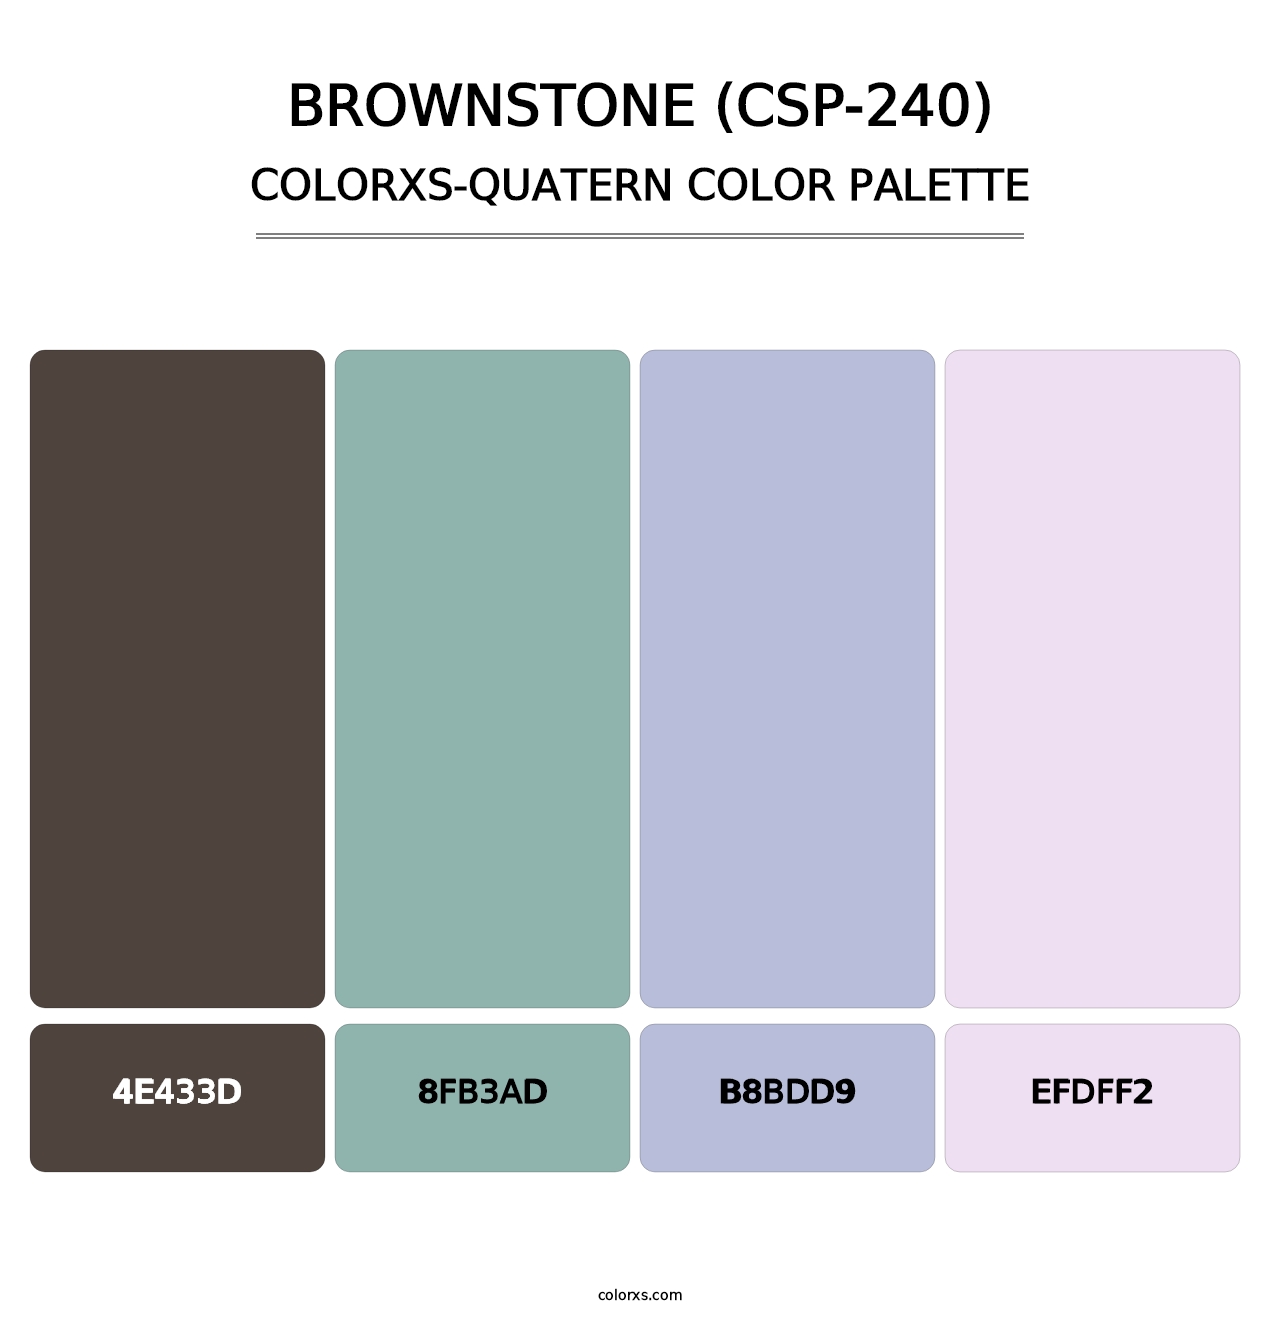 Brownstone (CSP-240) - Colorxs Quatern Palette